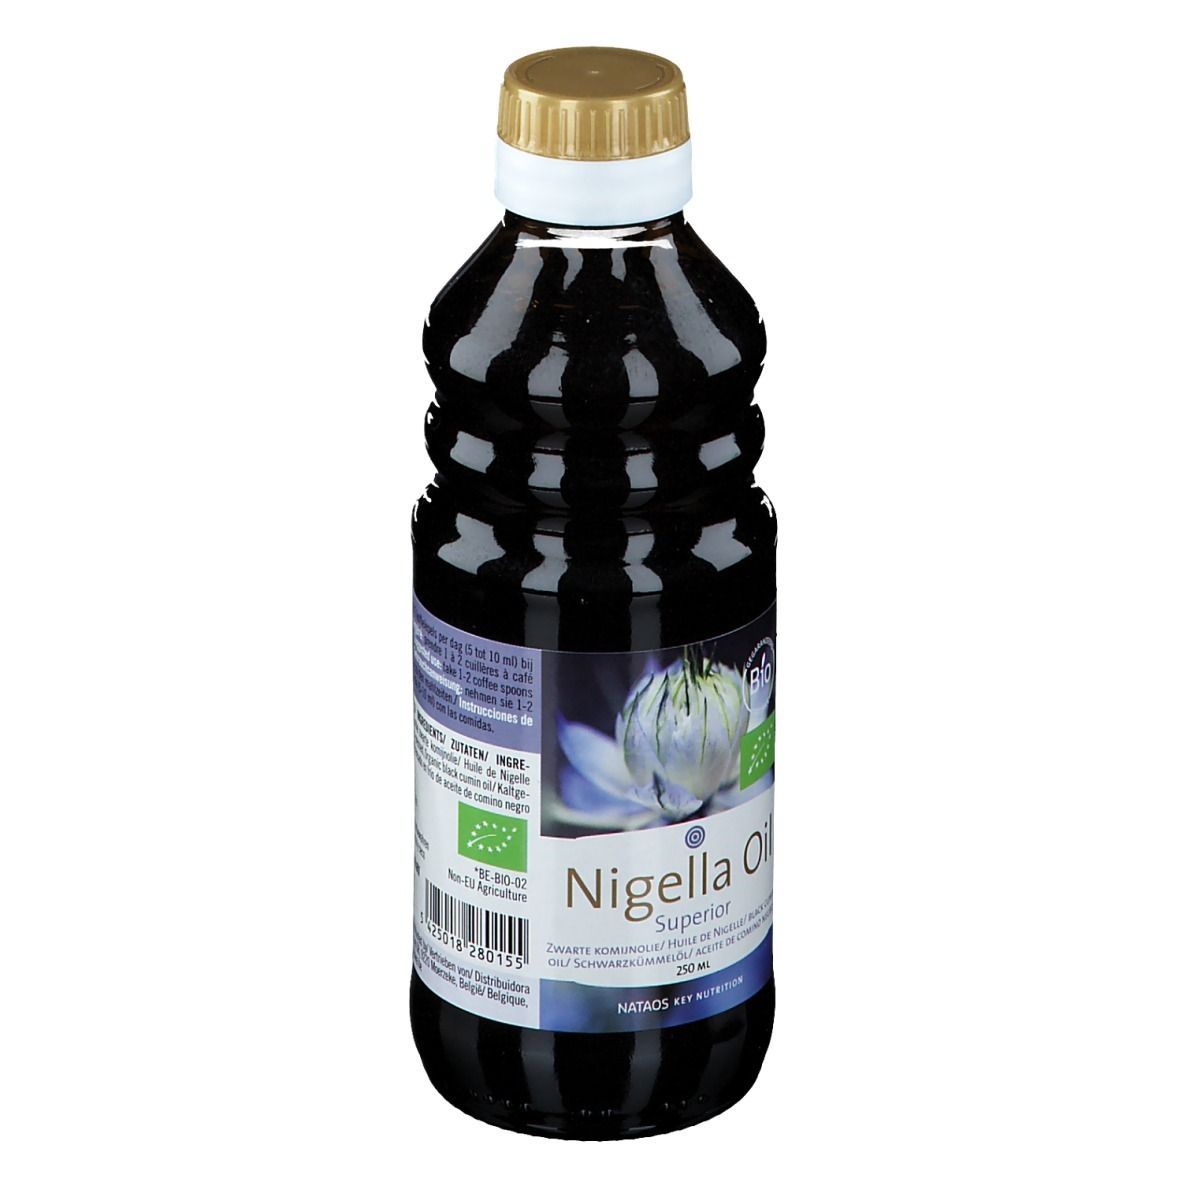 Nataos Key Nutrition Nigella Oil